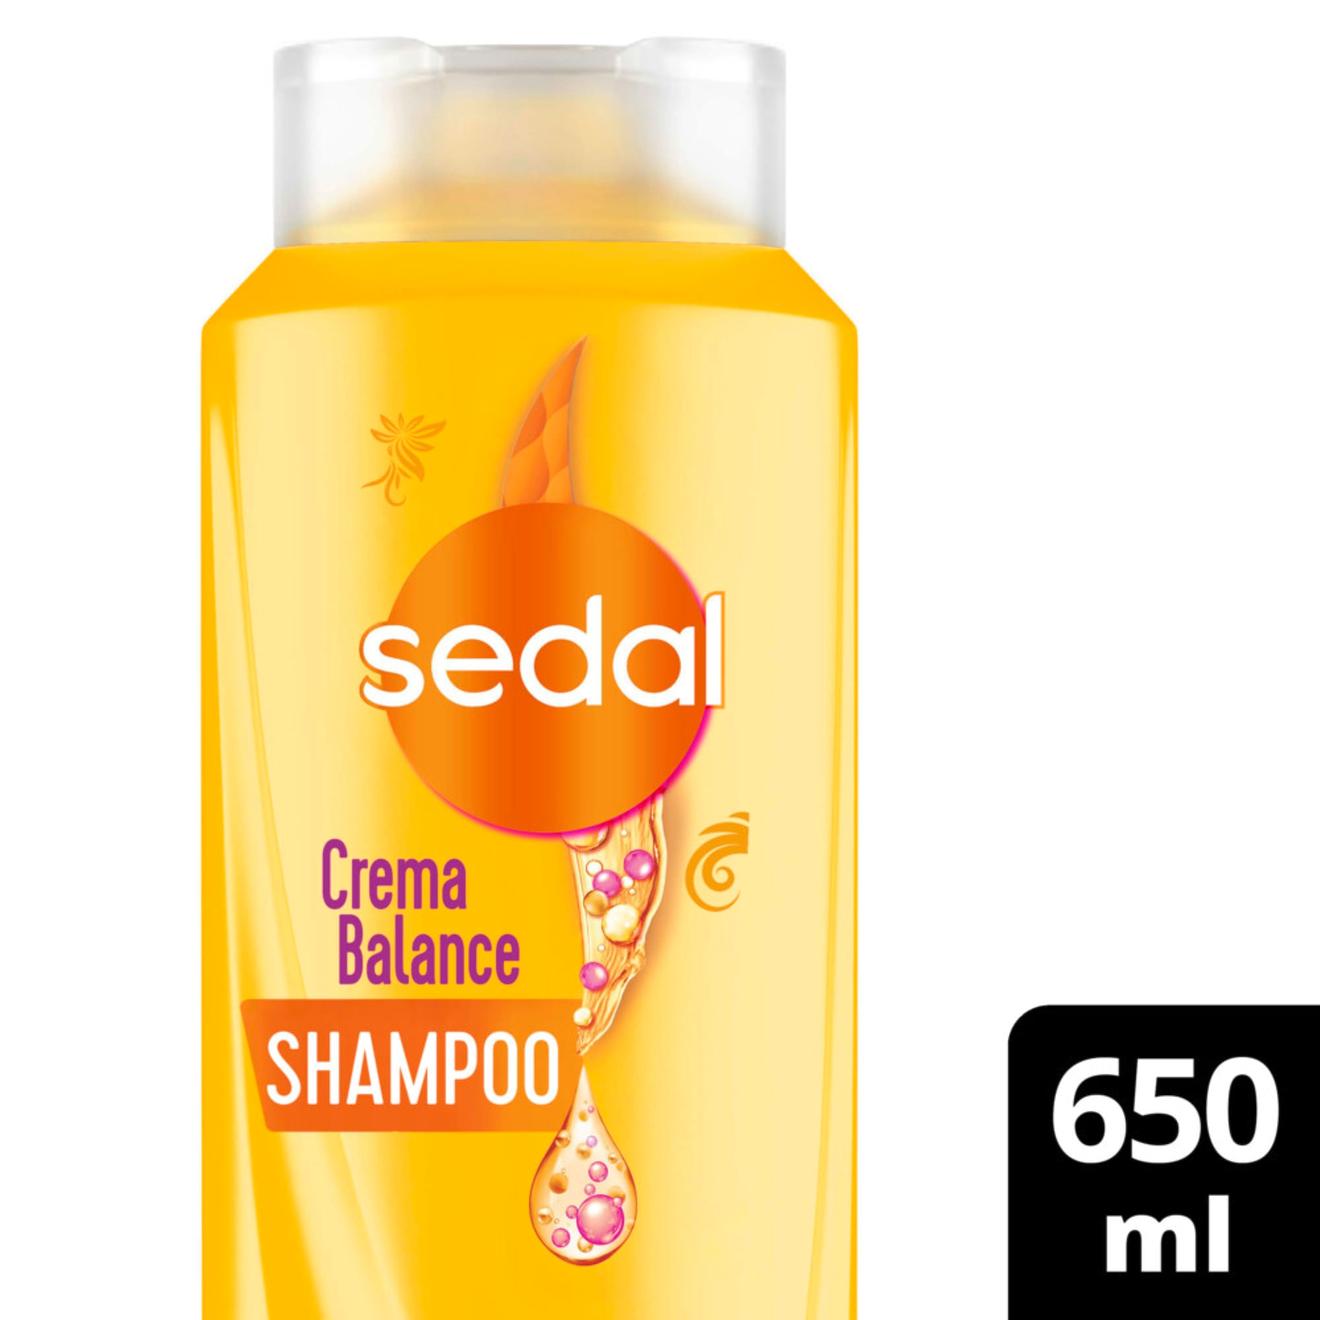 Oferta de Shampoo Seda crema balance 650 cc. por $2486,25 en Carrefour